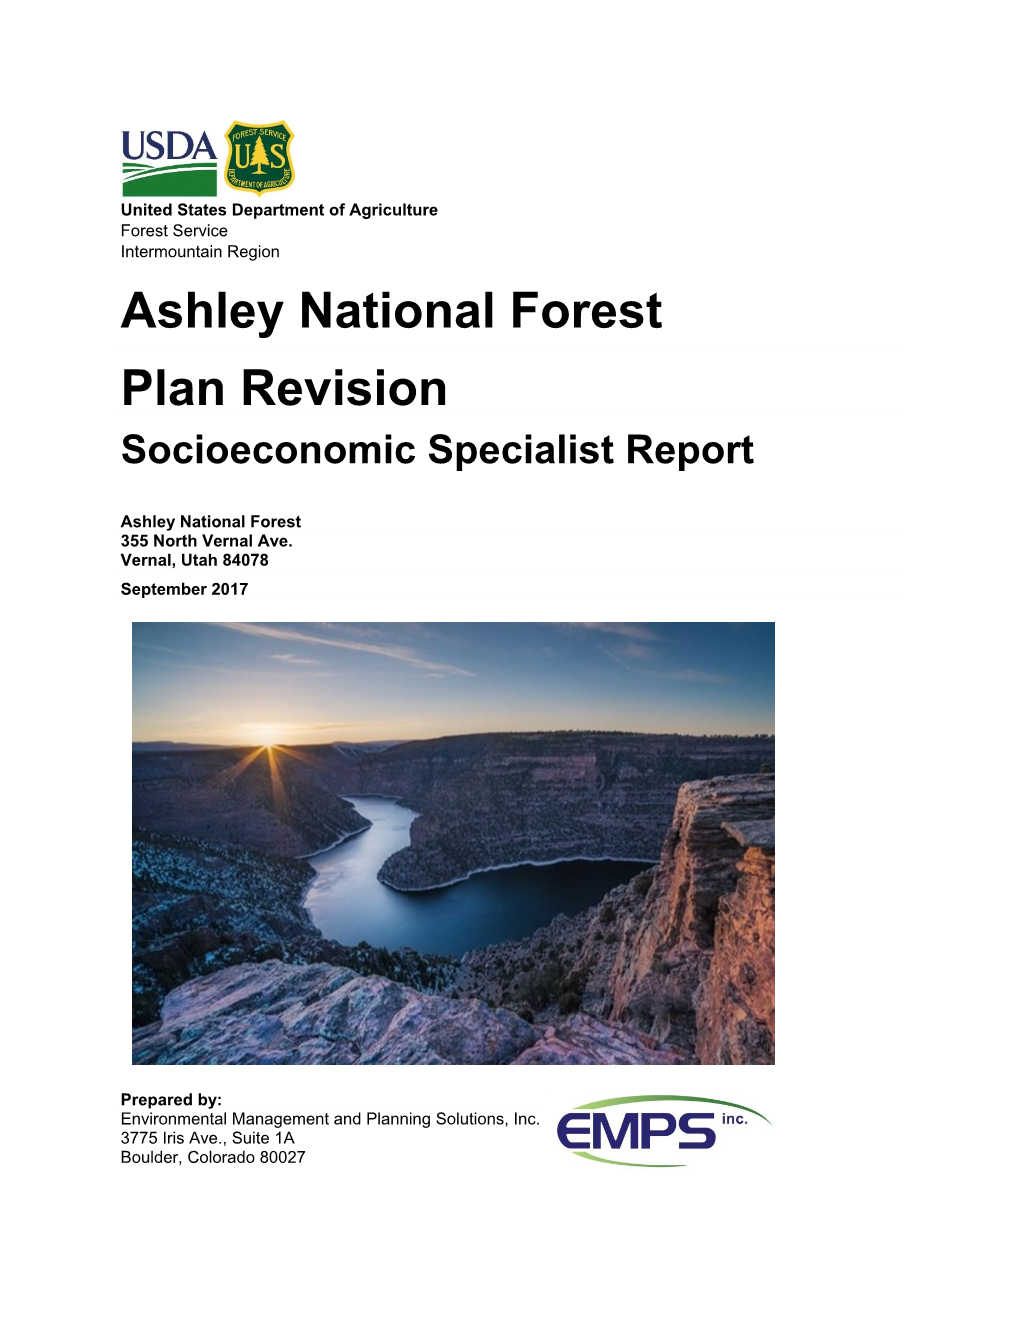 Ashley National Forest Plan Revision Public Draft Socioeconomic